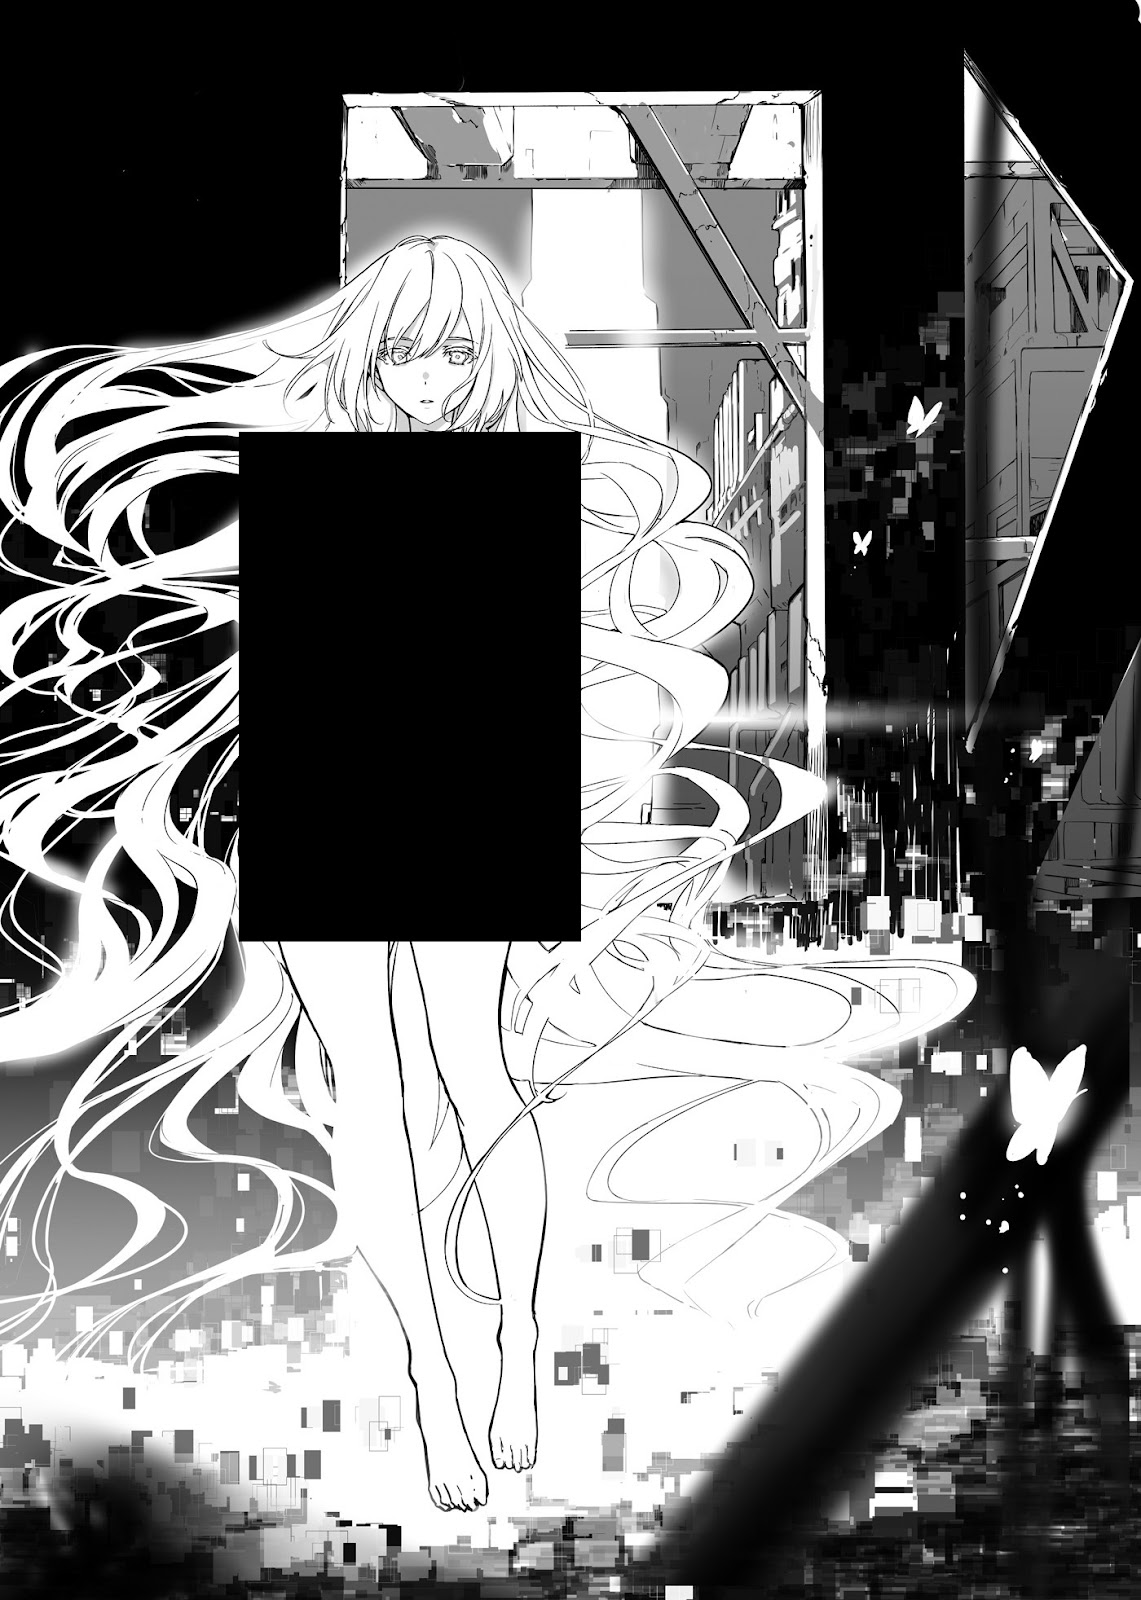 [Ruidrive] - Ilustrasi Light Novel Rebuild World - Volume 01 part 1 - 04